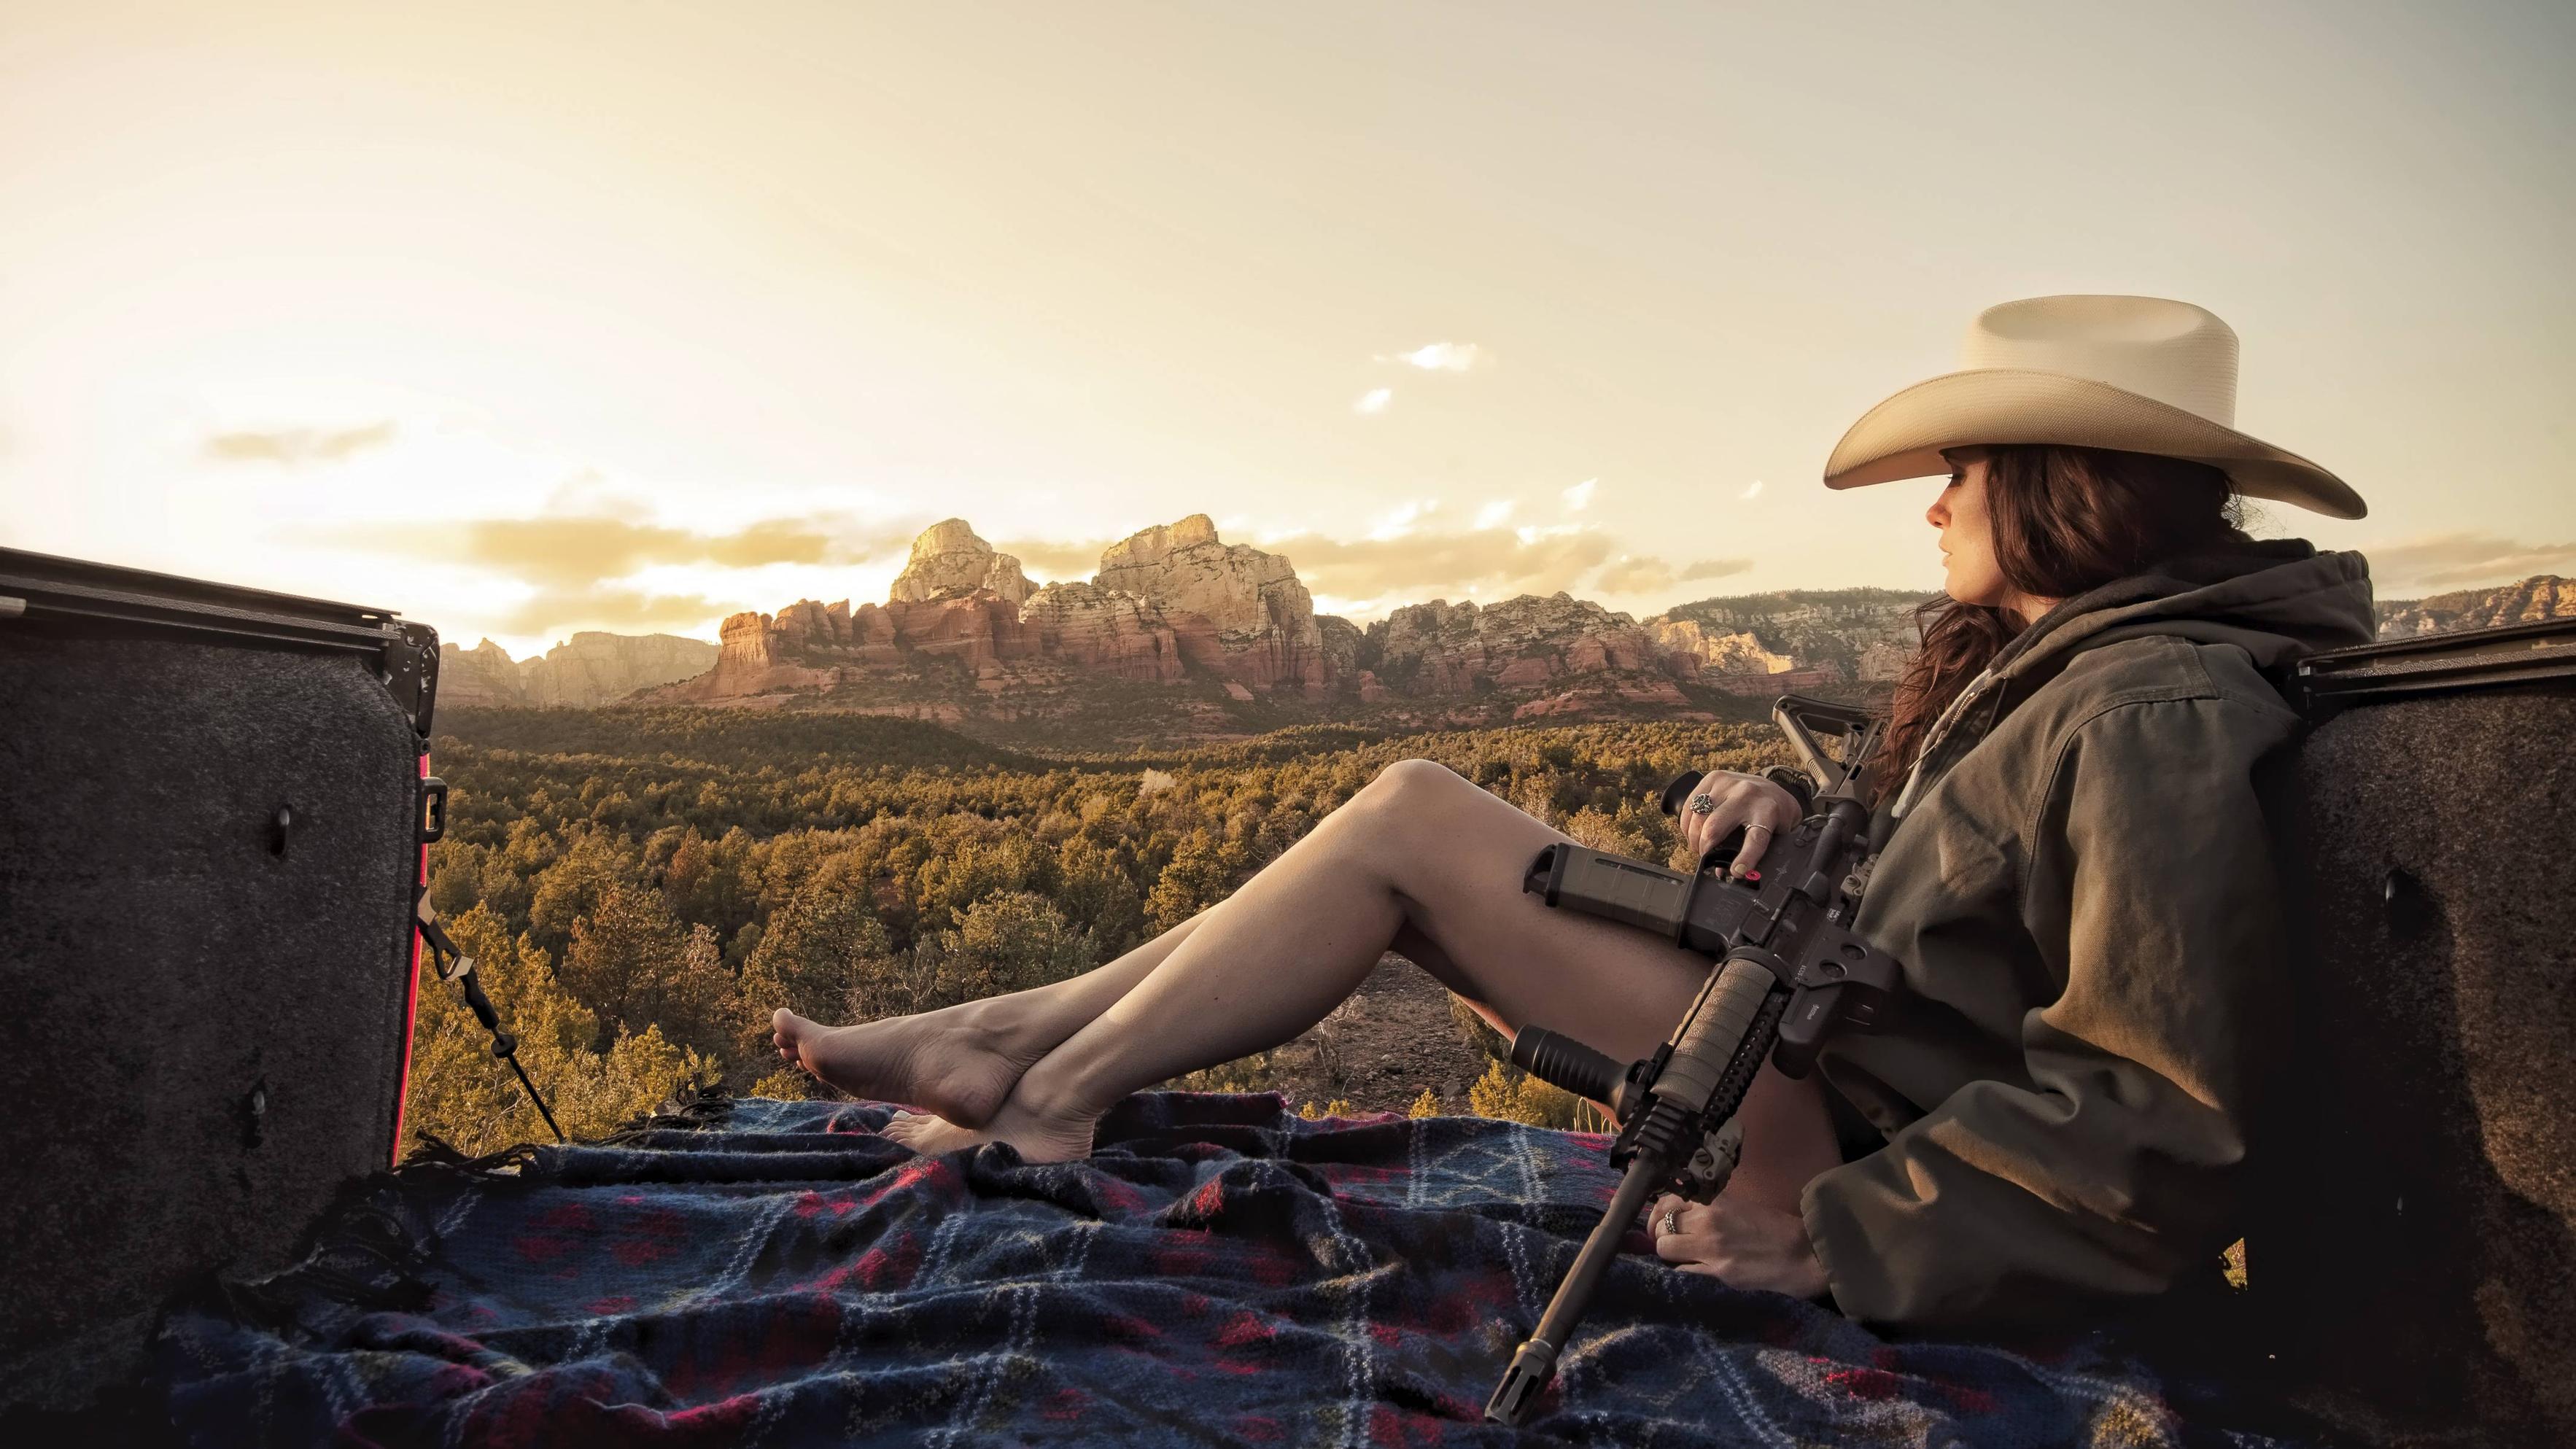 country girl wallpaper,sky,cowboy hat,landscape,human,headgear